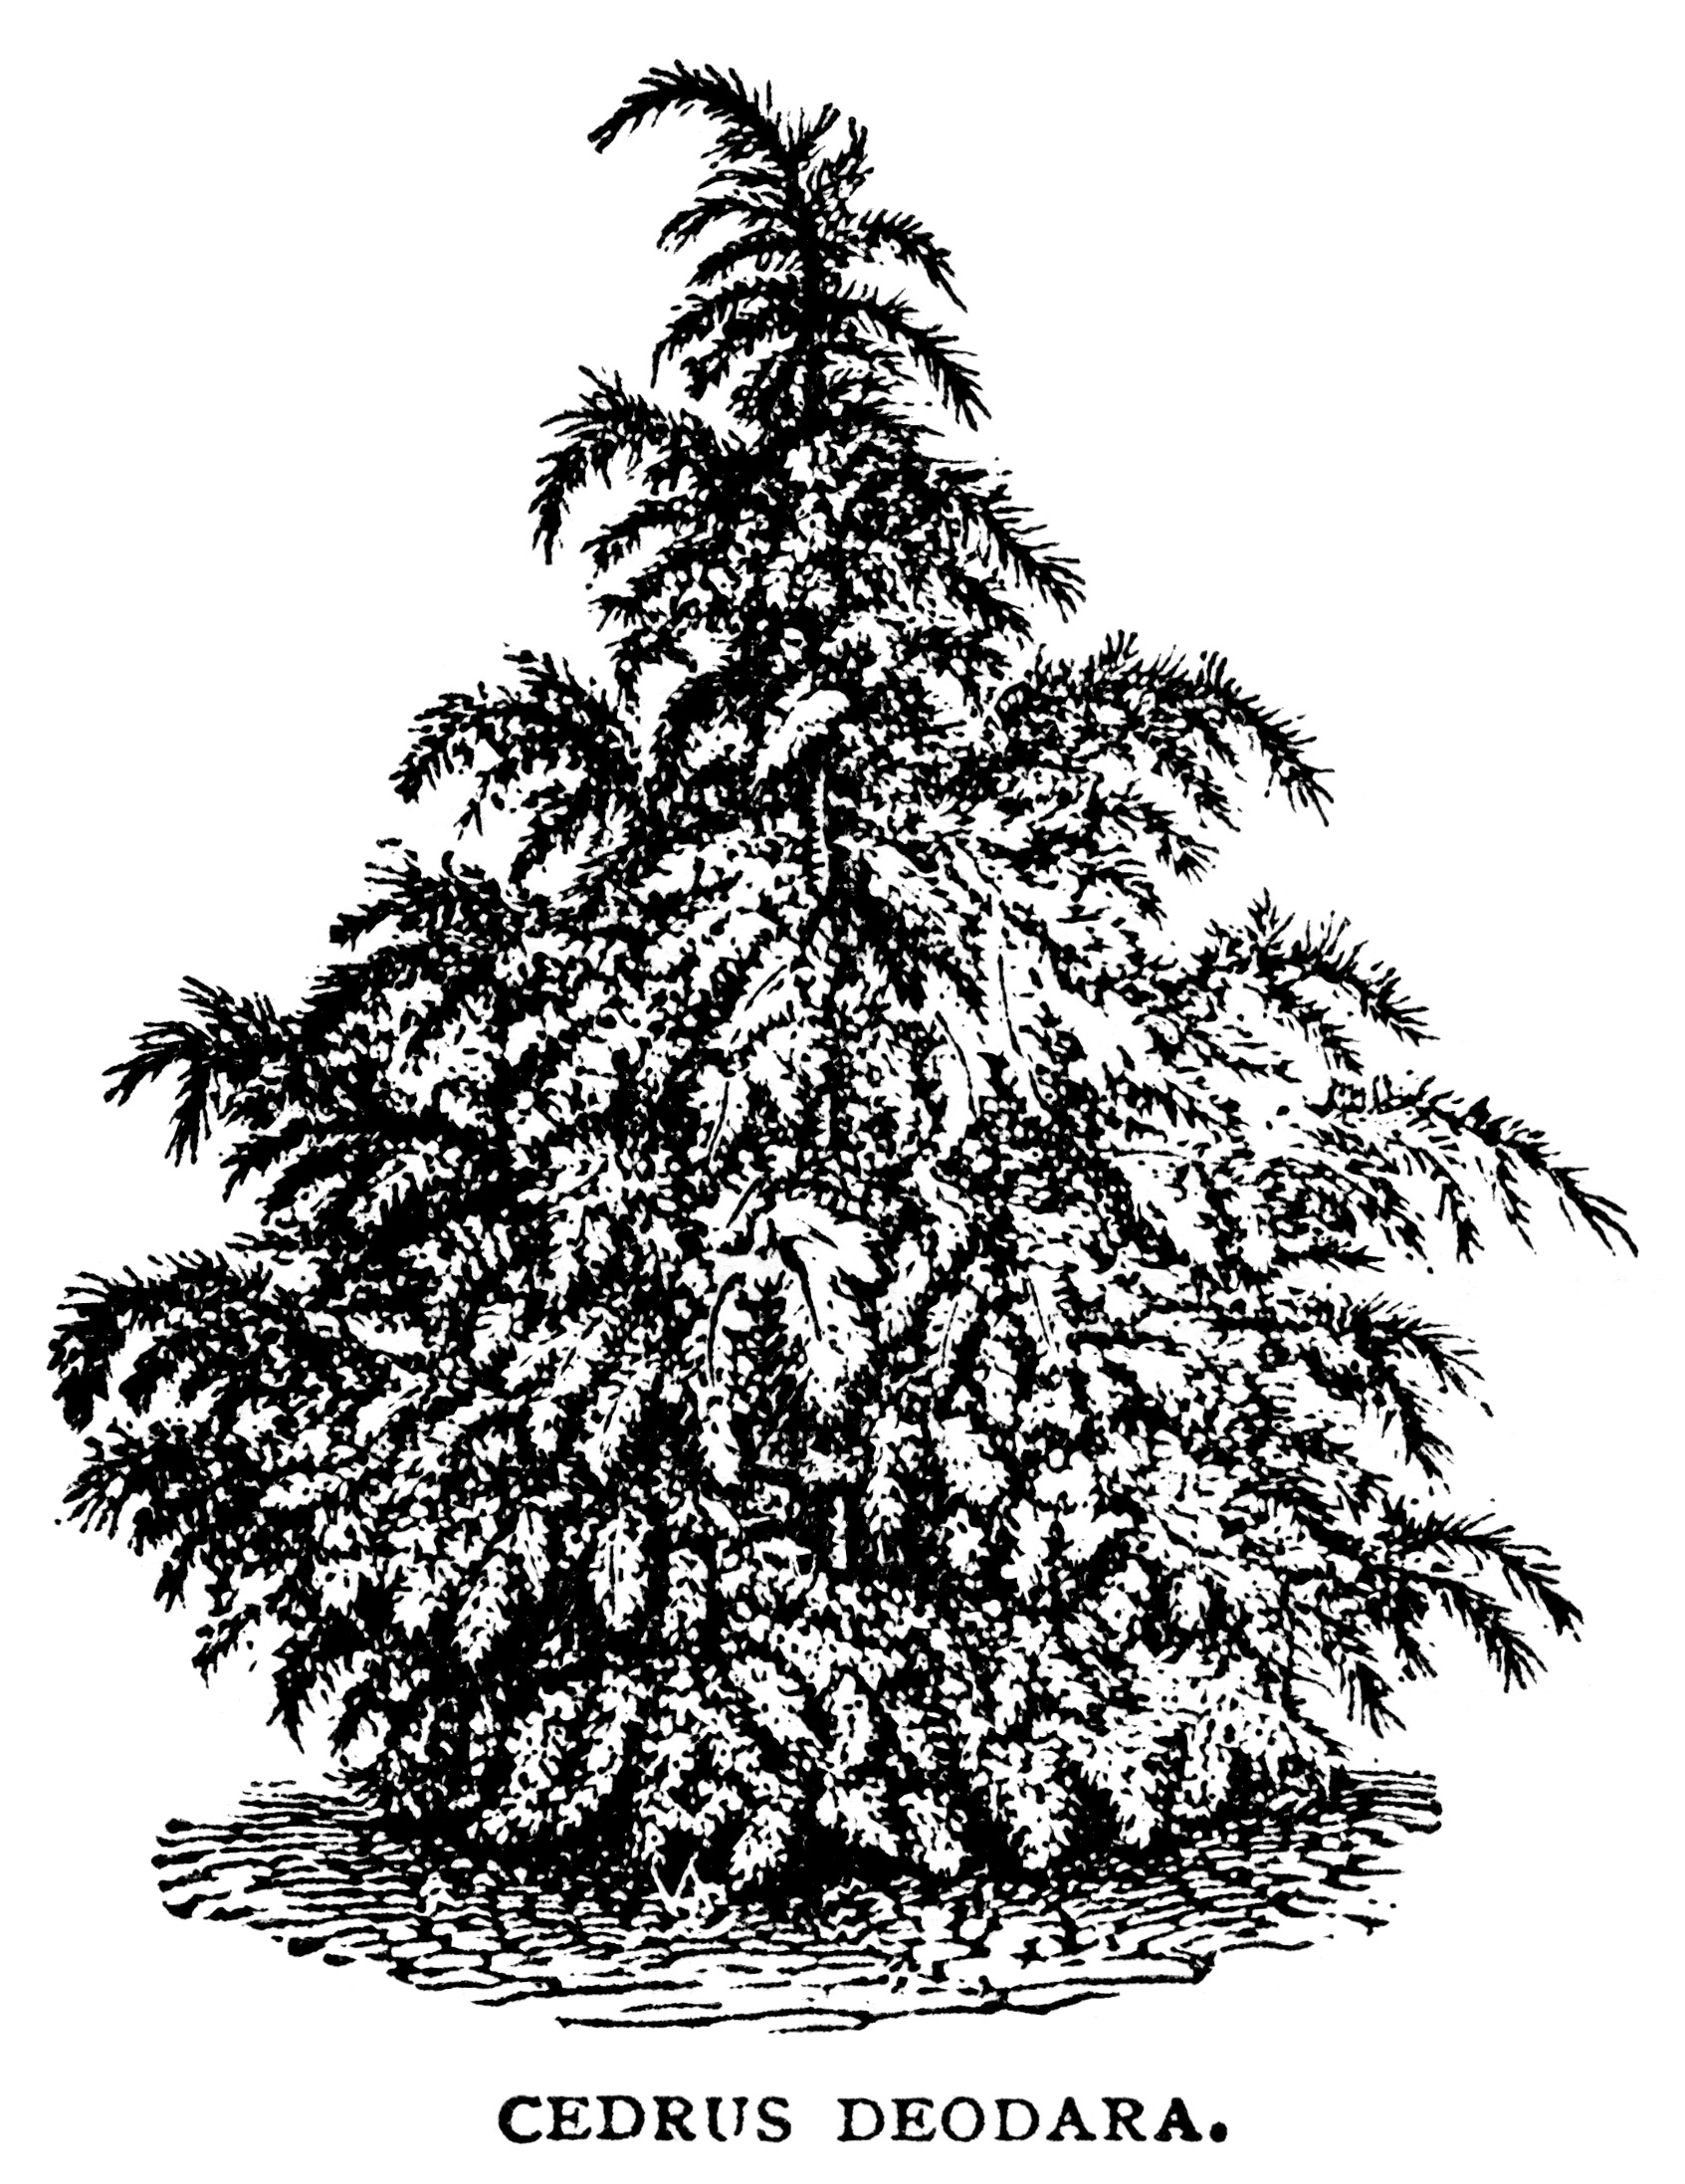 black and white graphics, botanical spruce tree illustration.